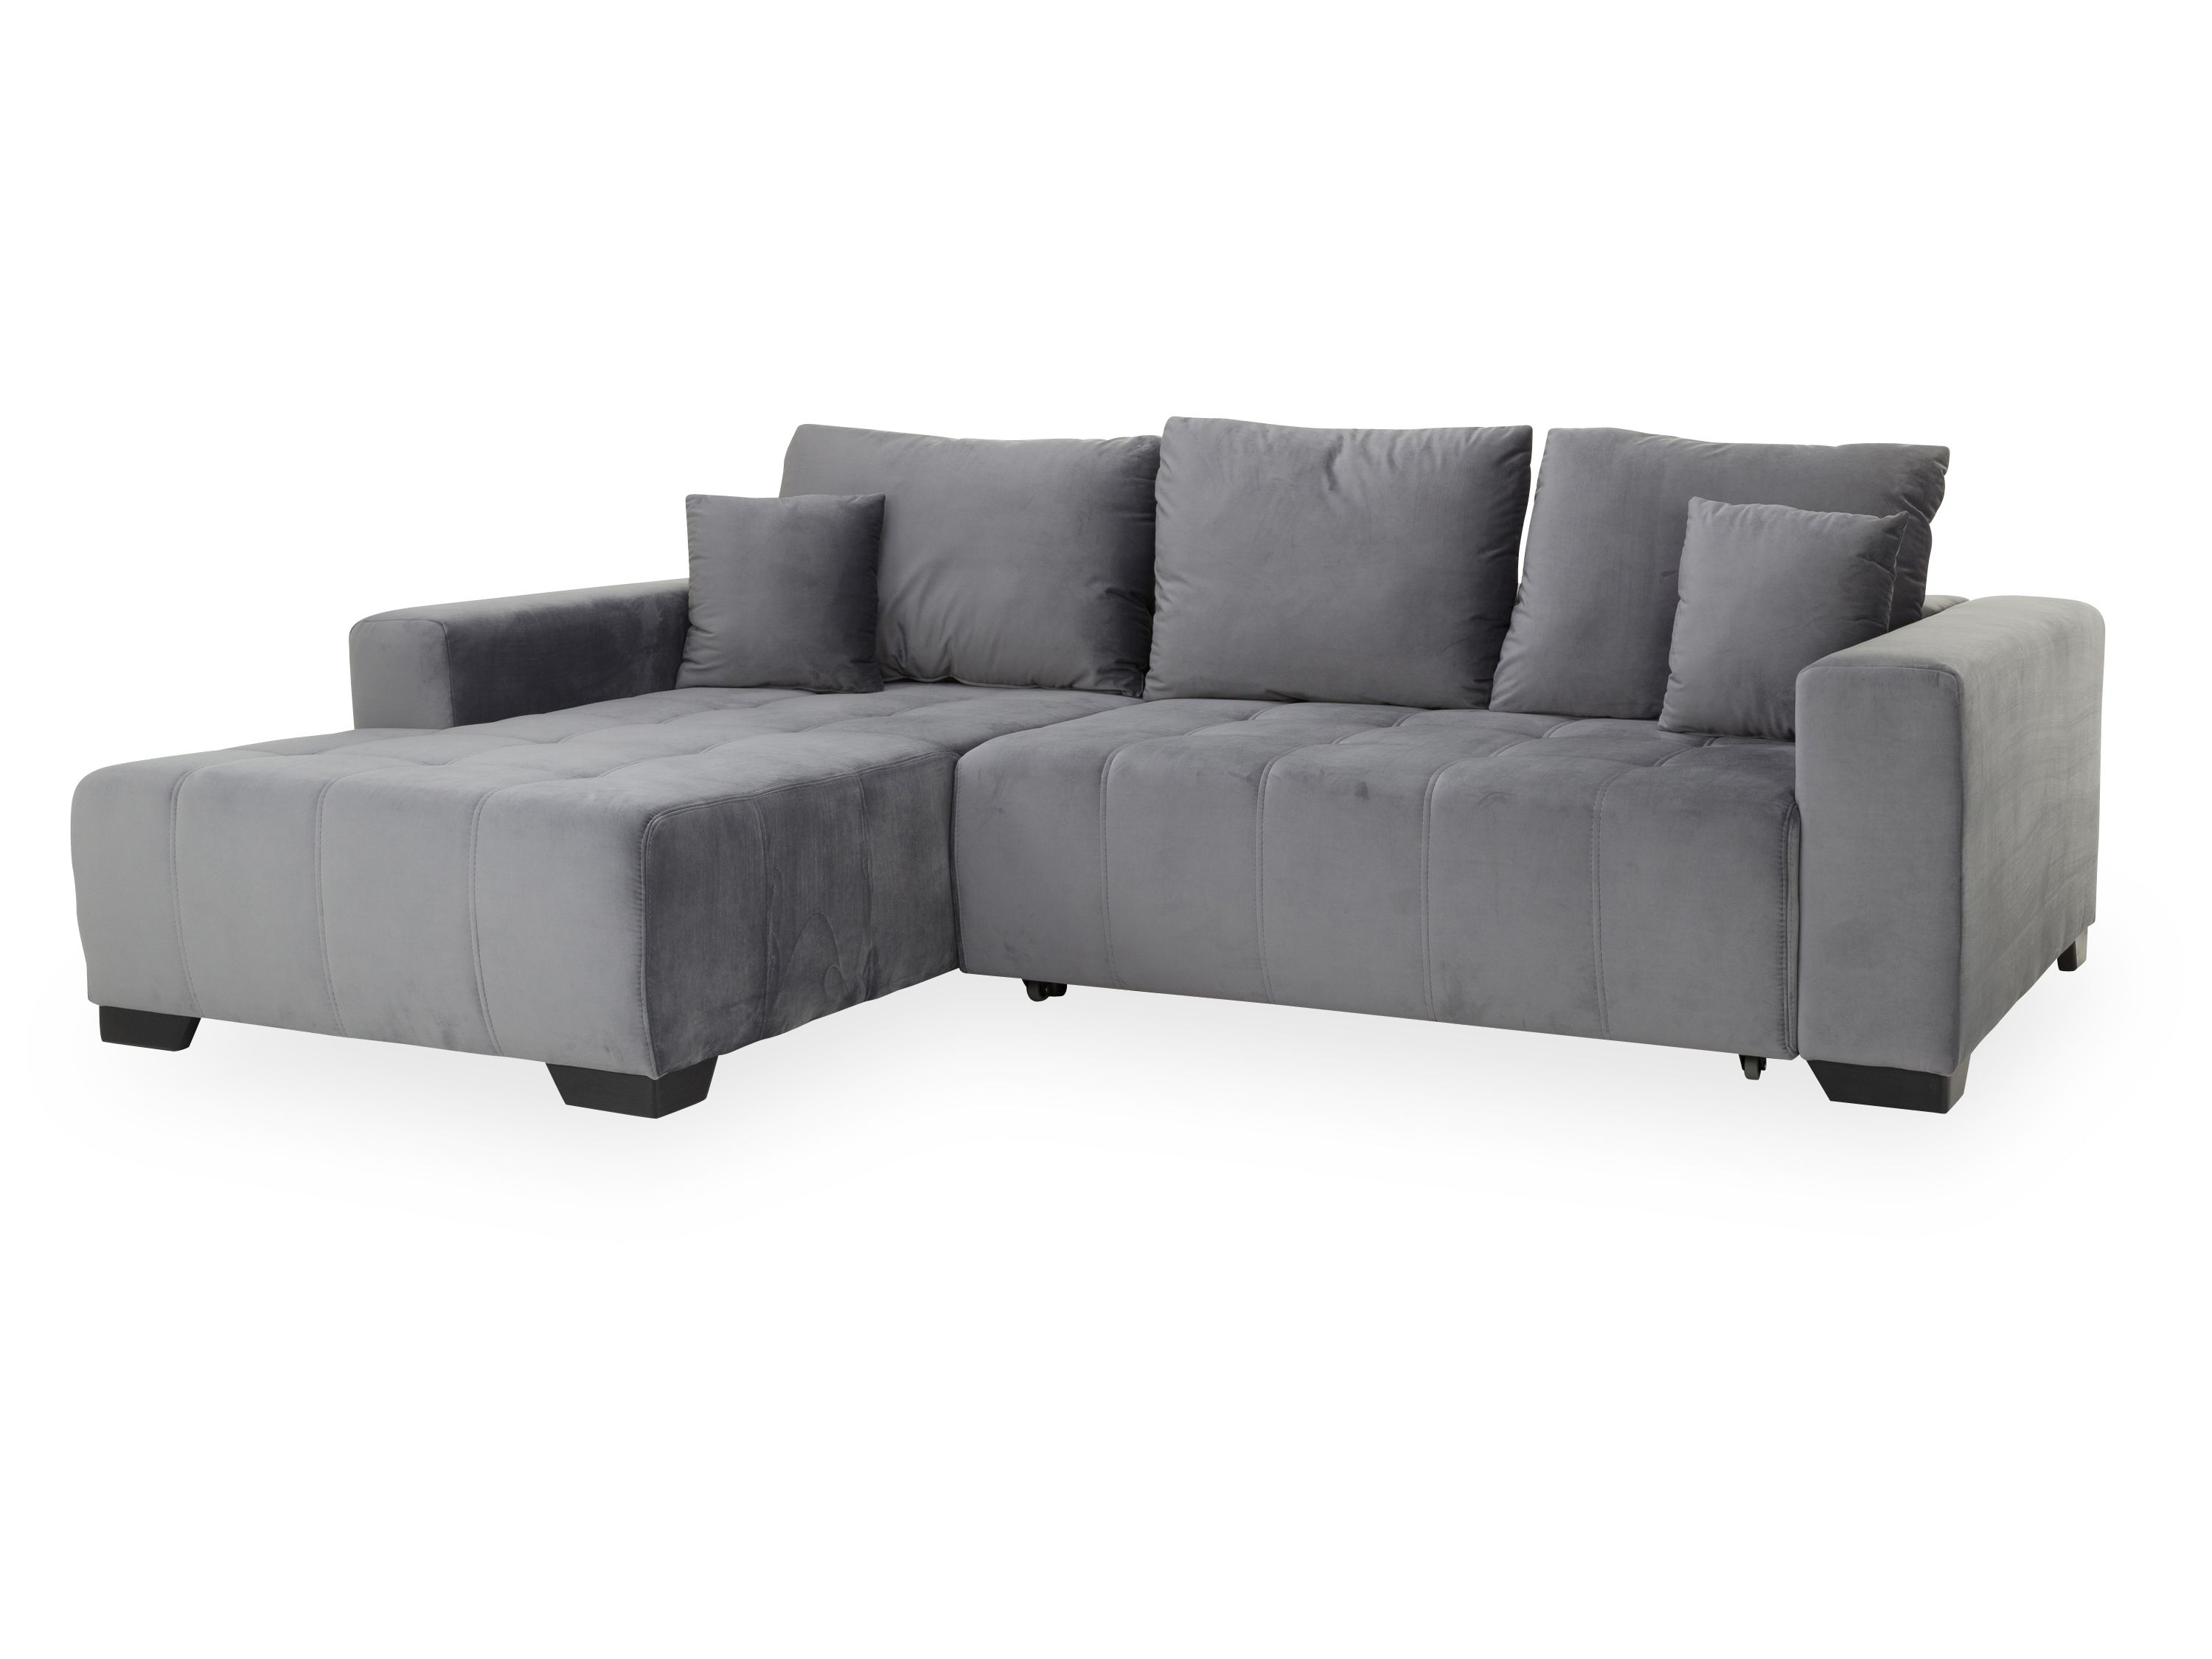 Polsterecken | Sofas & Sessel | Möbel